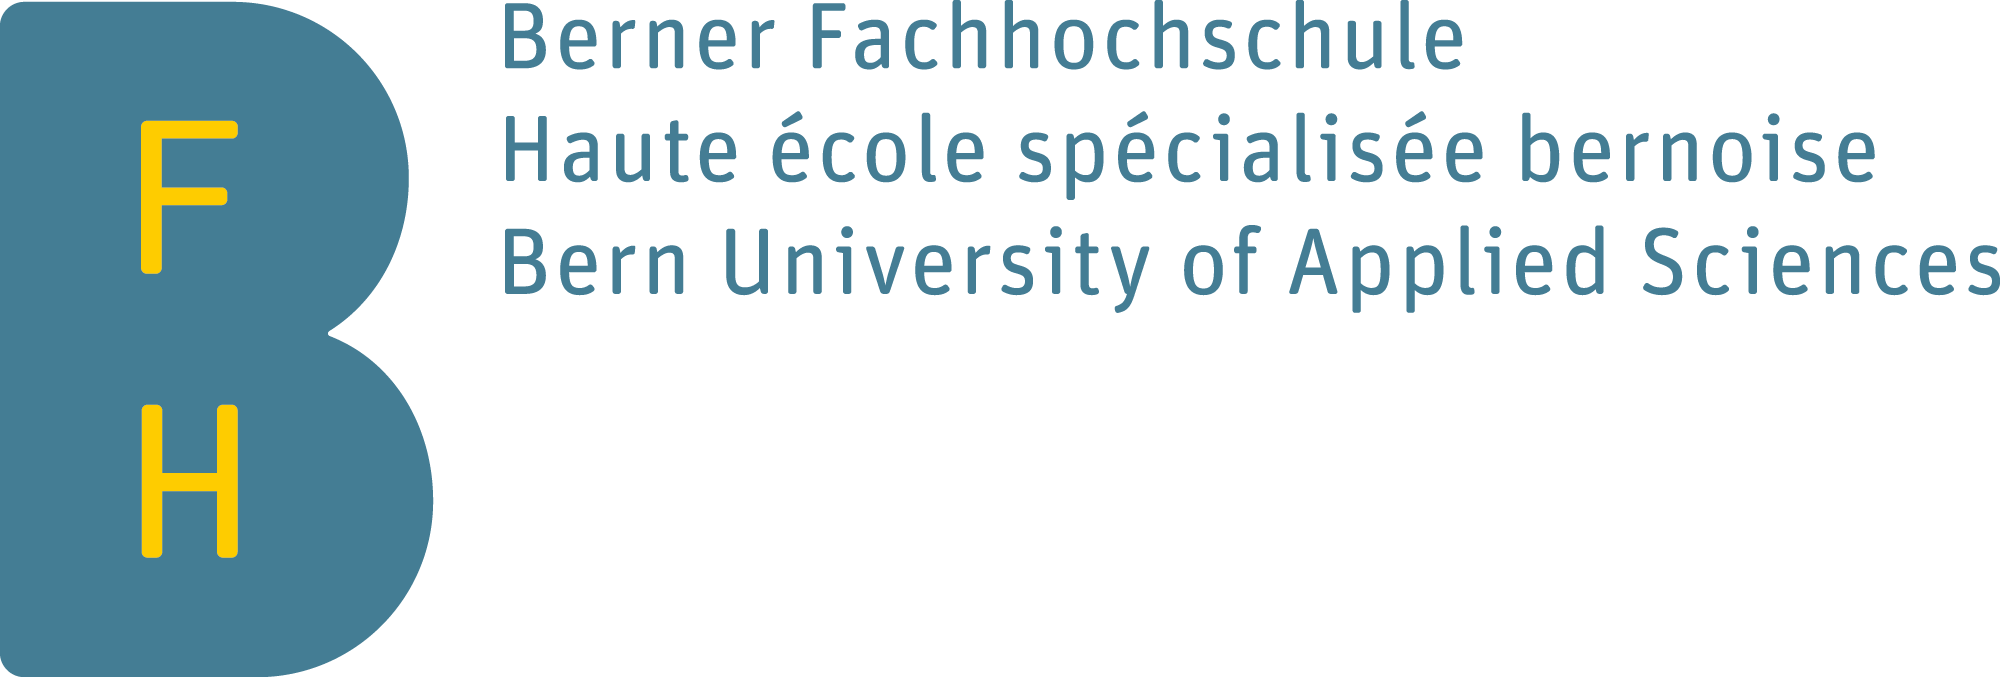 Delta Lektorat Berner Fachhochschule Logo